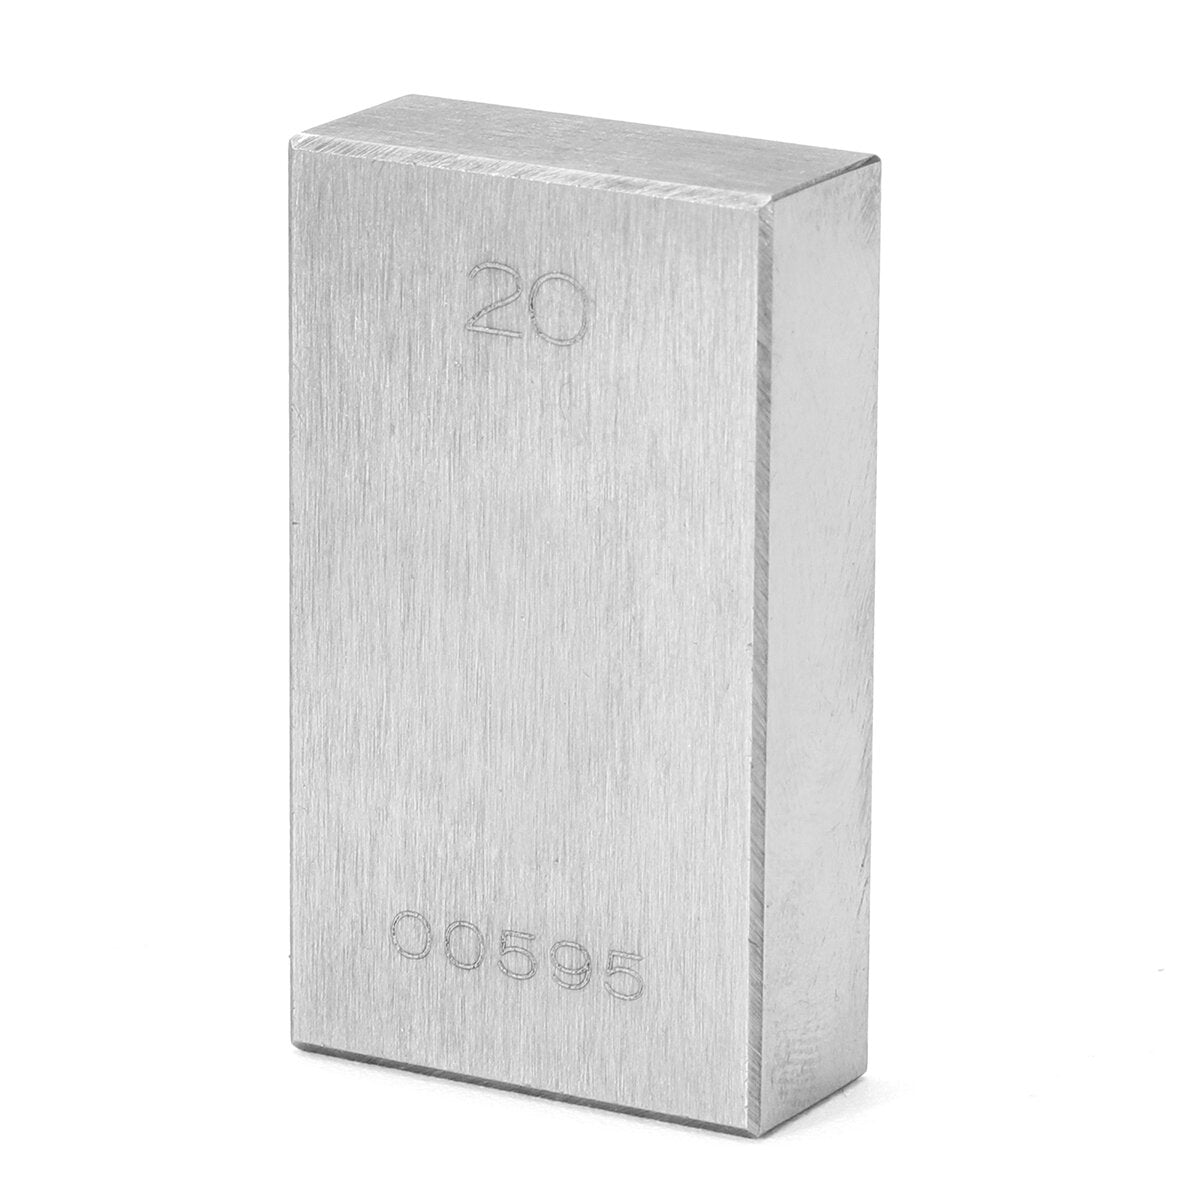 32pcs Steel Metric Gauge Block Grade 0 Slip Jo Blocks 1.005-50mm Woodworking Setup Blocks Height Gauge Measure Tools